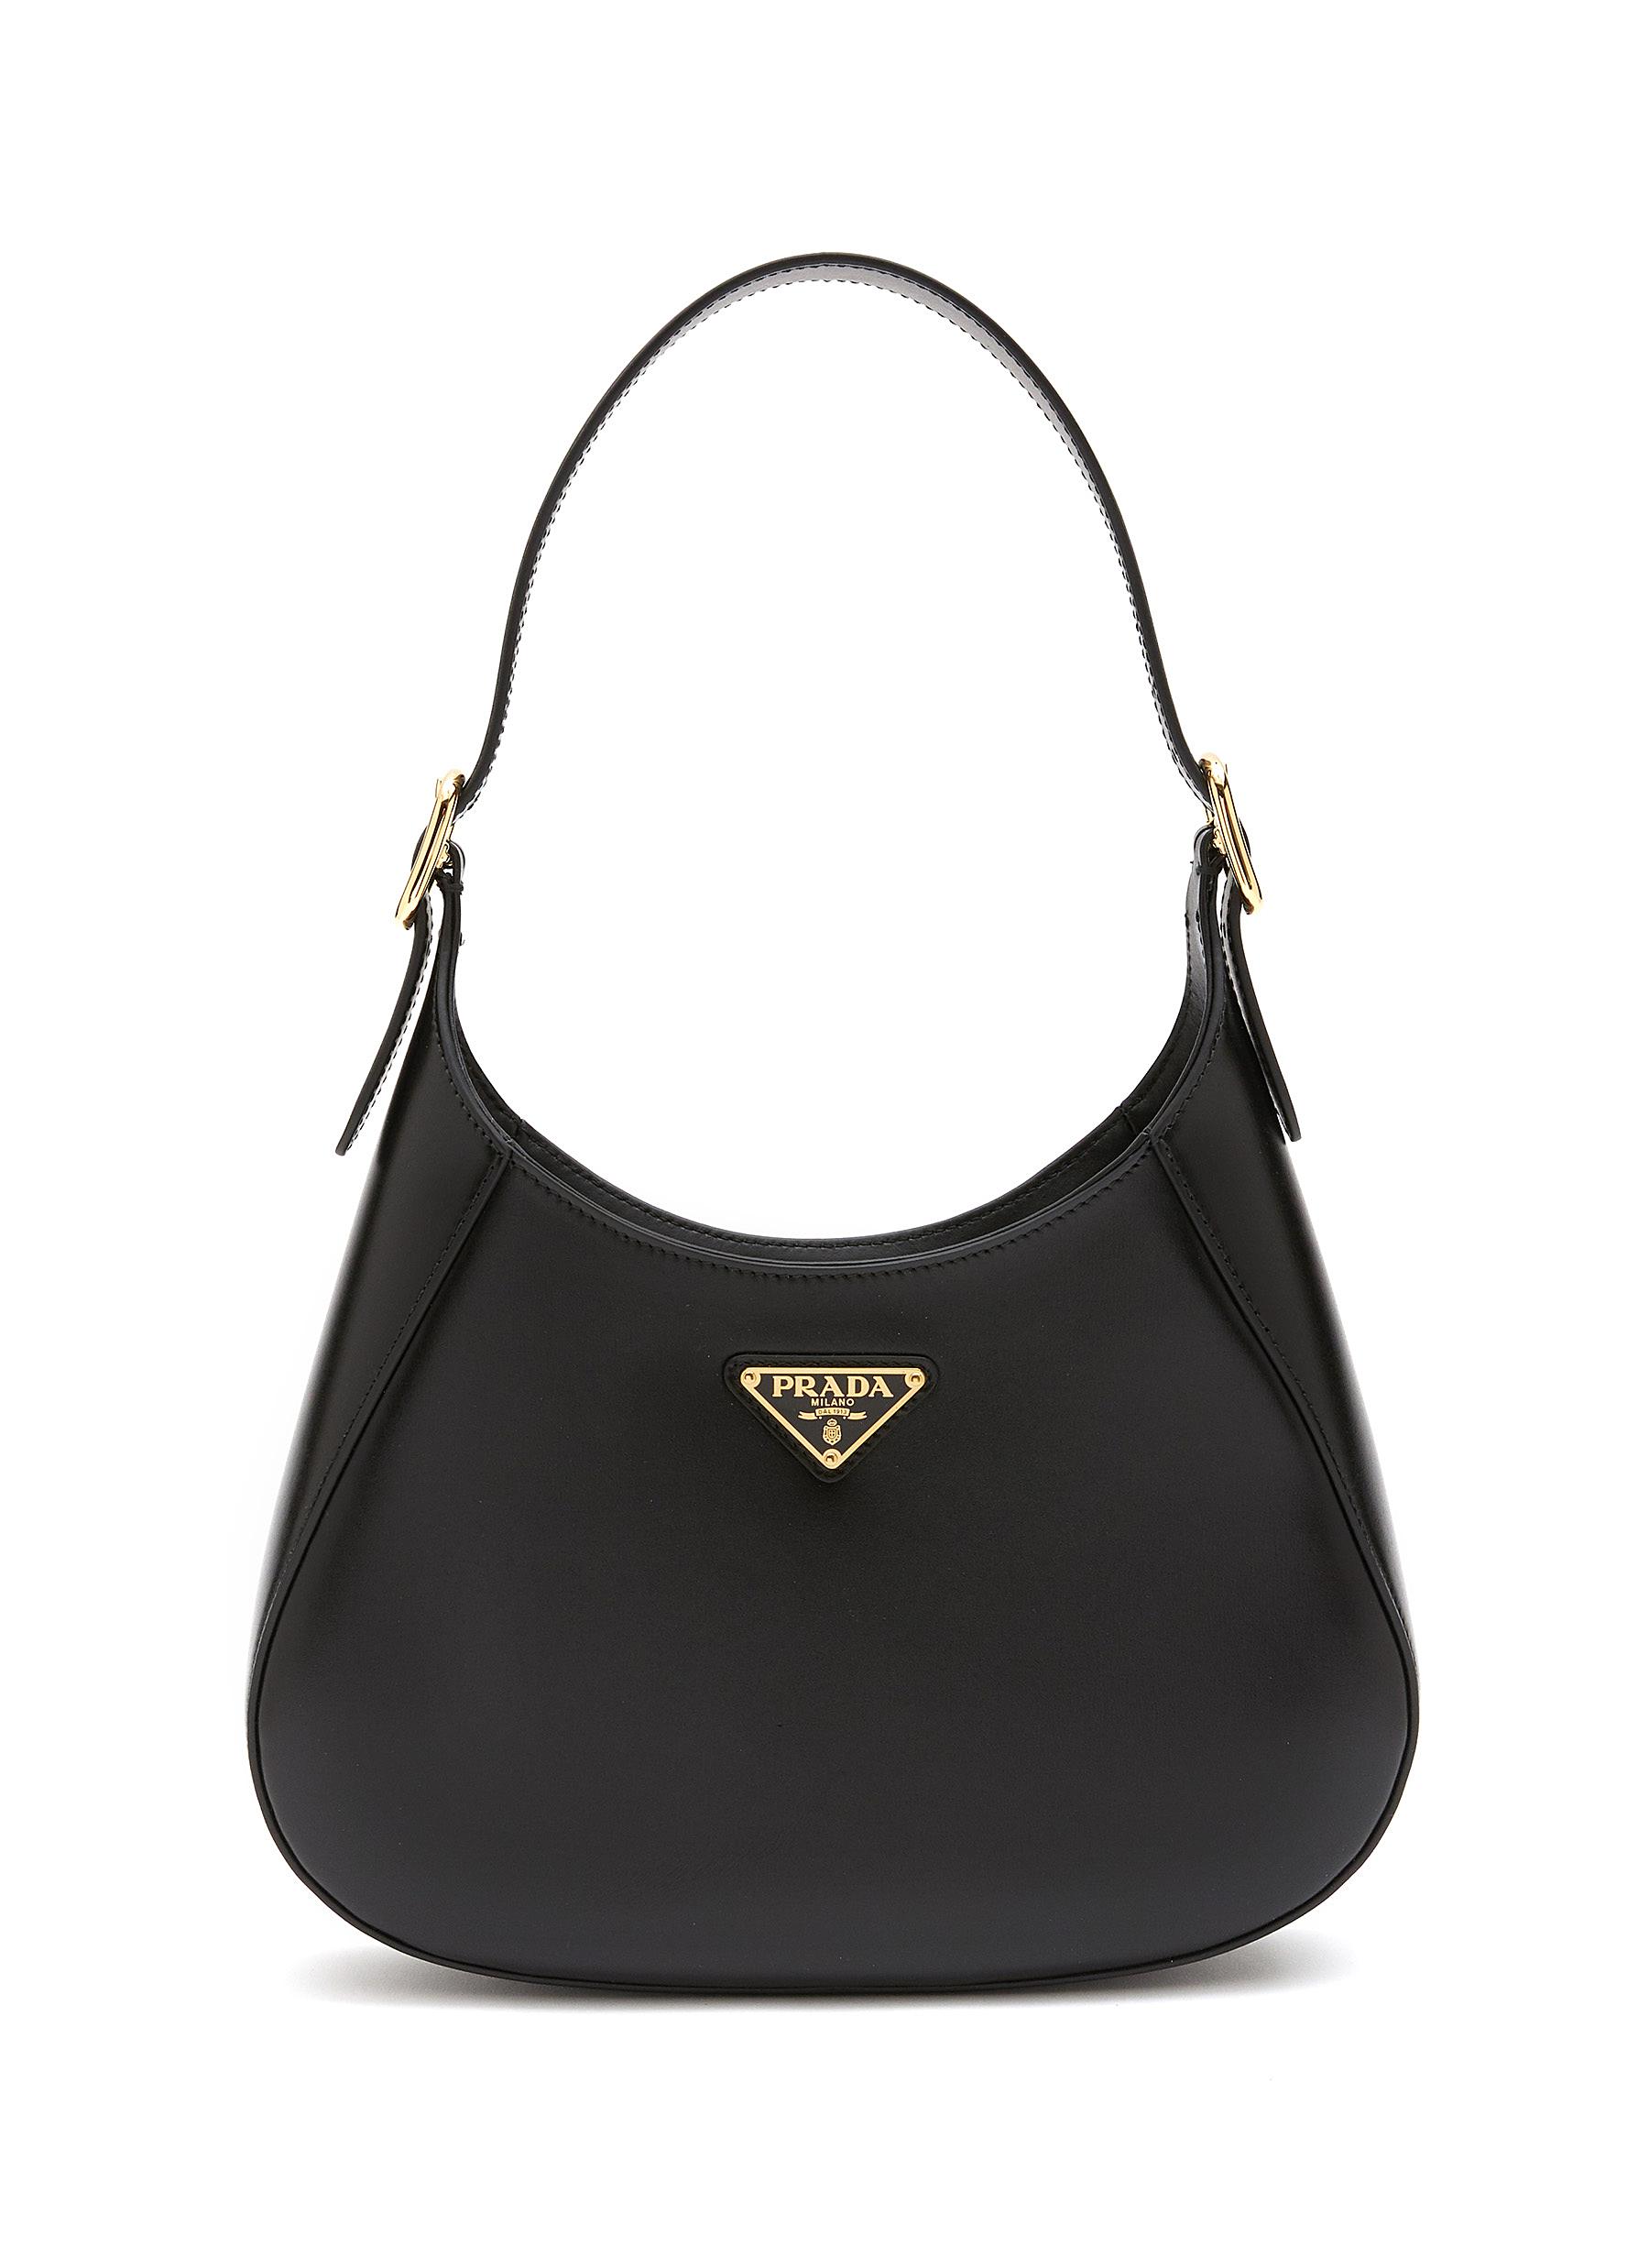 PRADA | 'Cleo' Calfskin Leather Shoulder Bag | Women | Lane Crawford